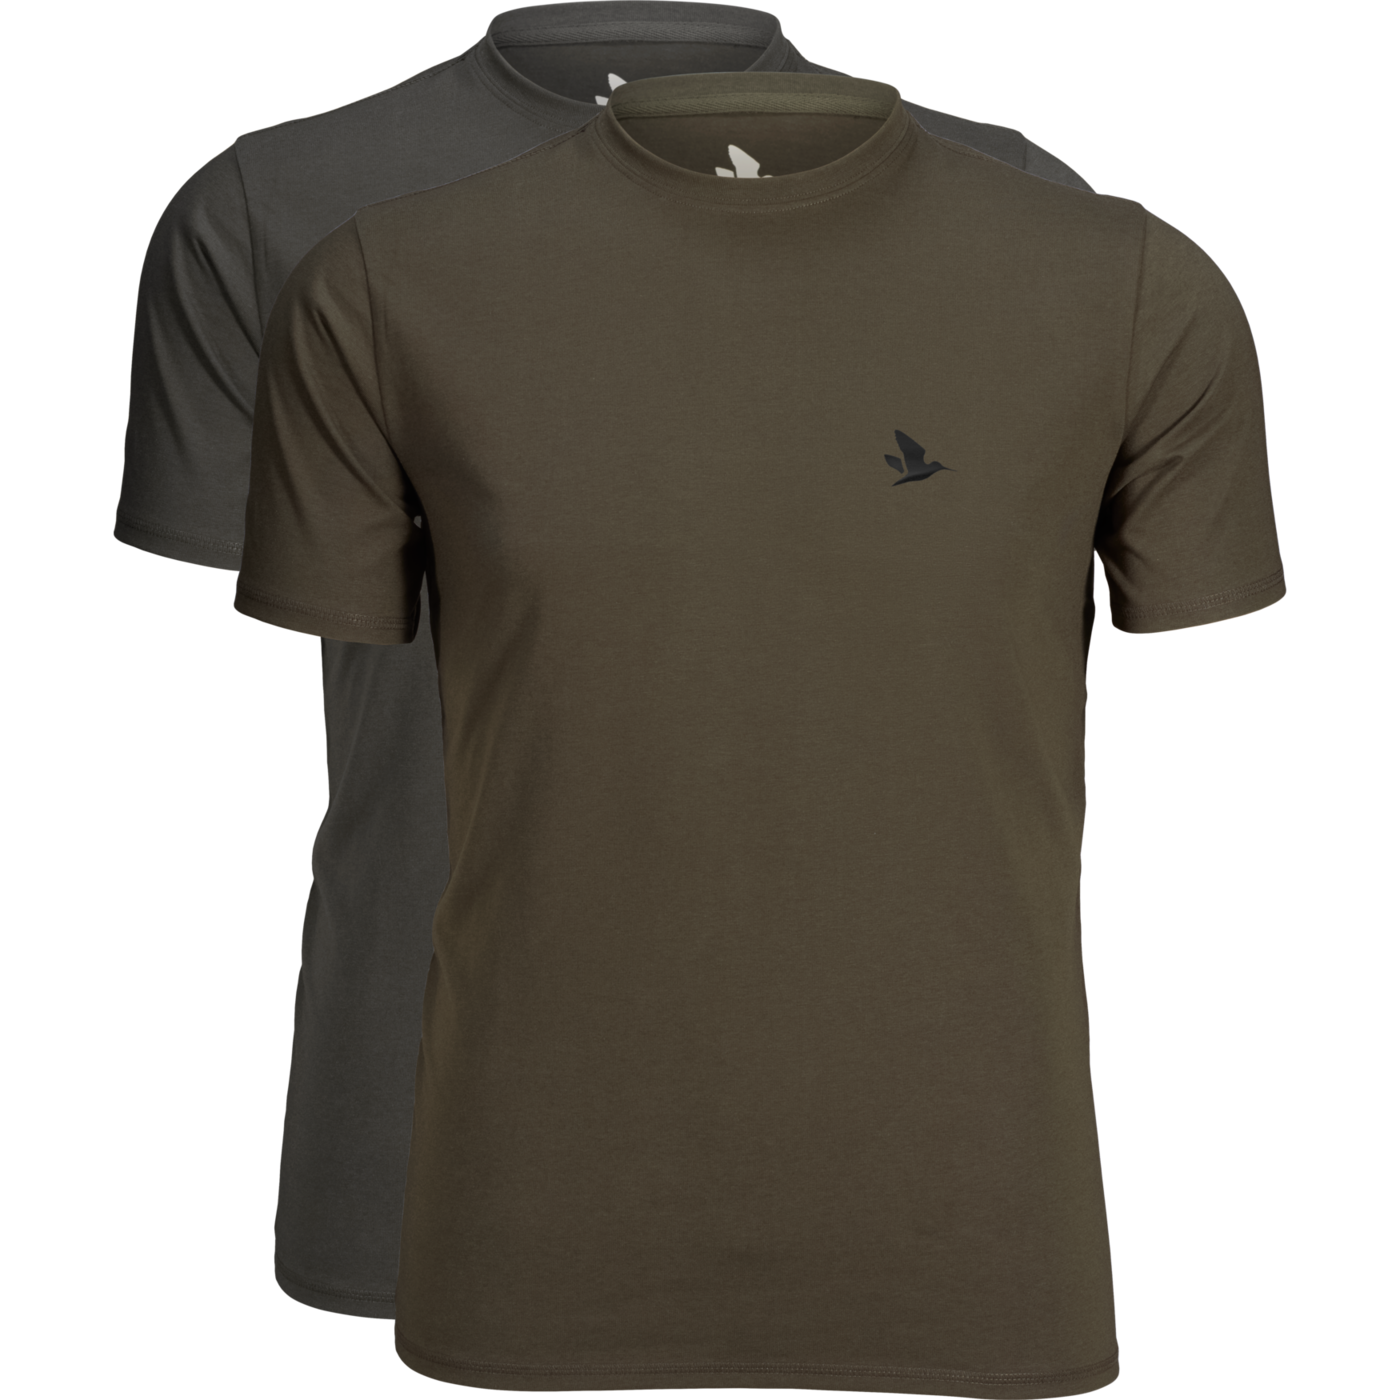 Outdoor 2-pack t-shirt - Raven/Pine green - L thumbnail